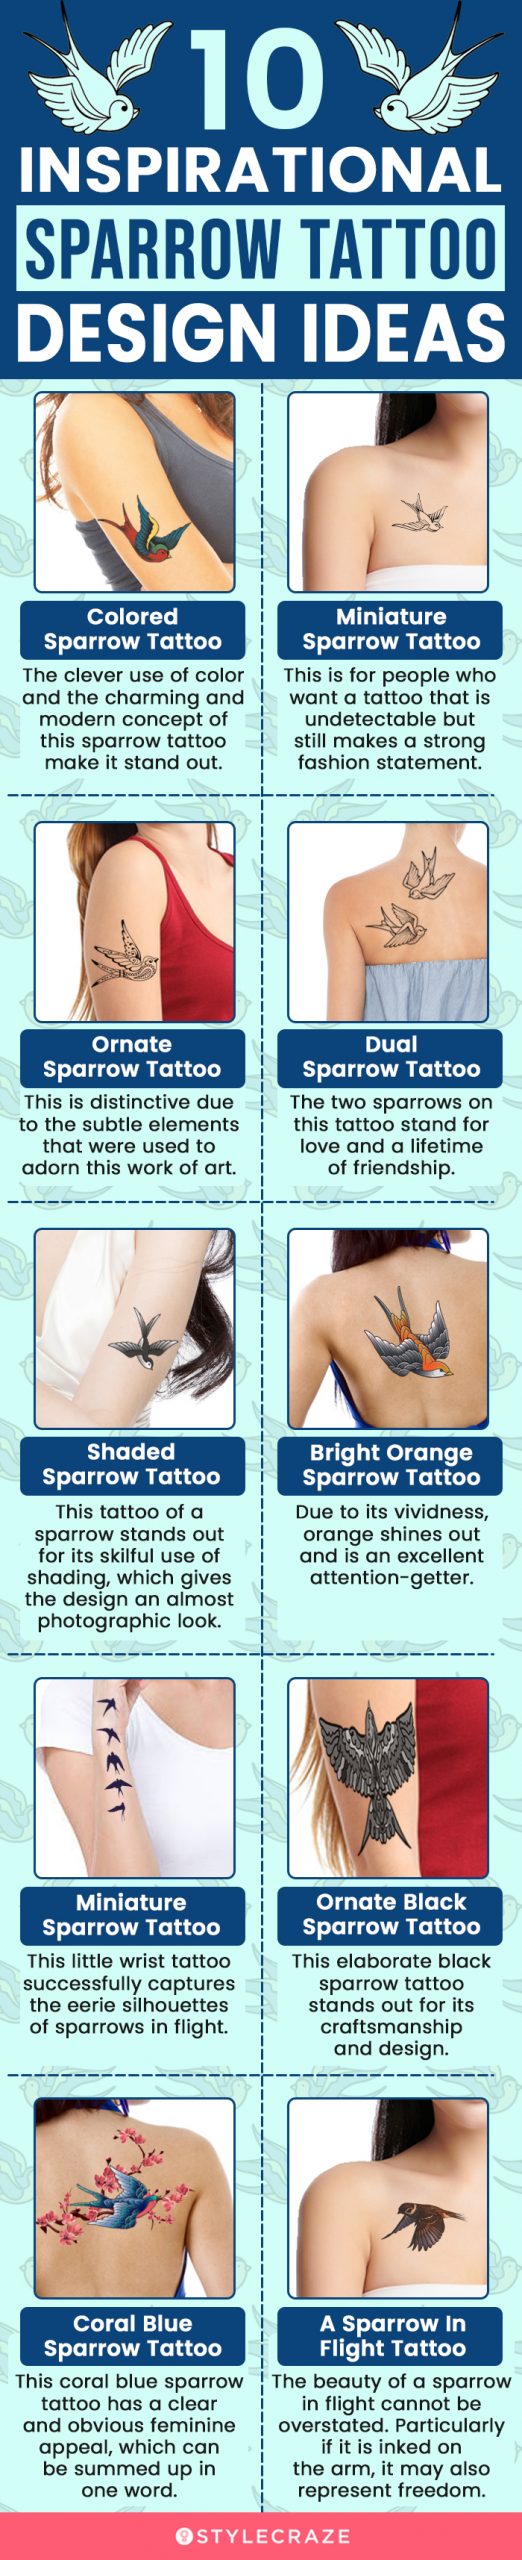 10 inspirational sparrow tattoo design ideas (infographic)